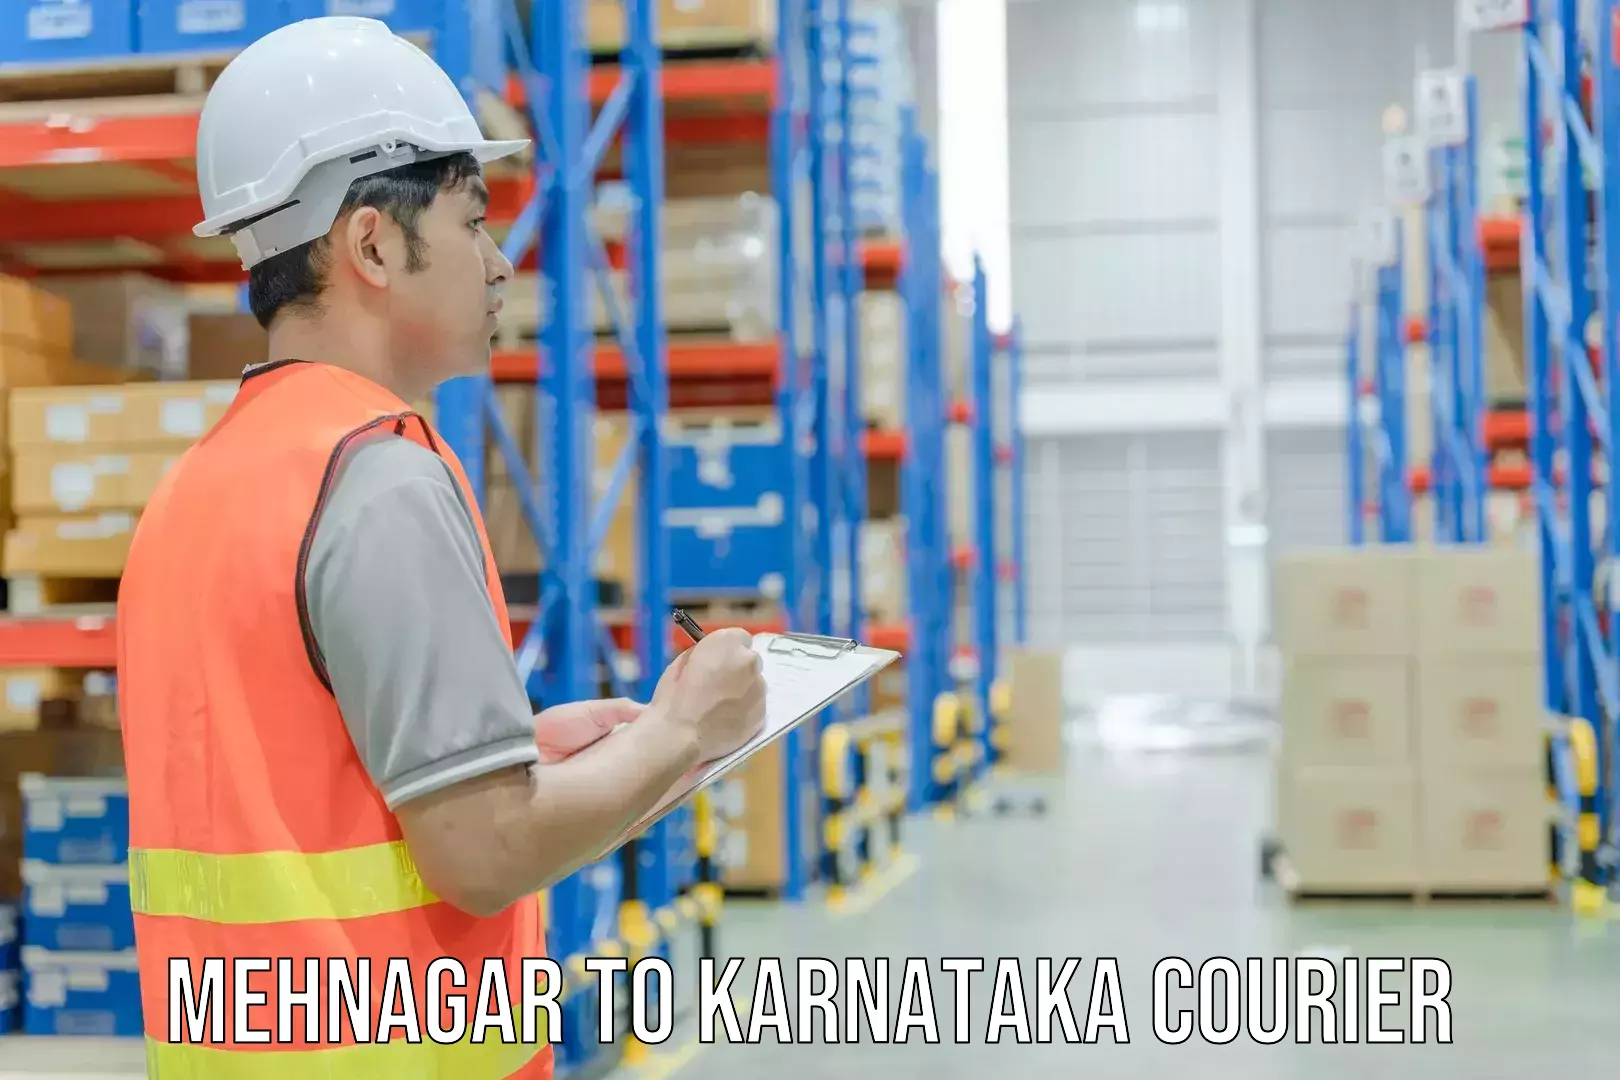 On-call courier service Mehnagar to Karnataka